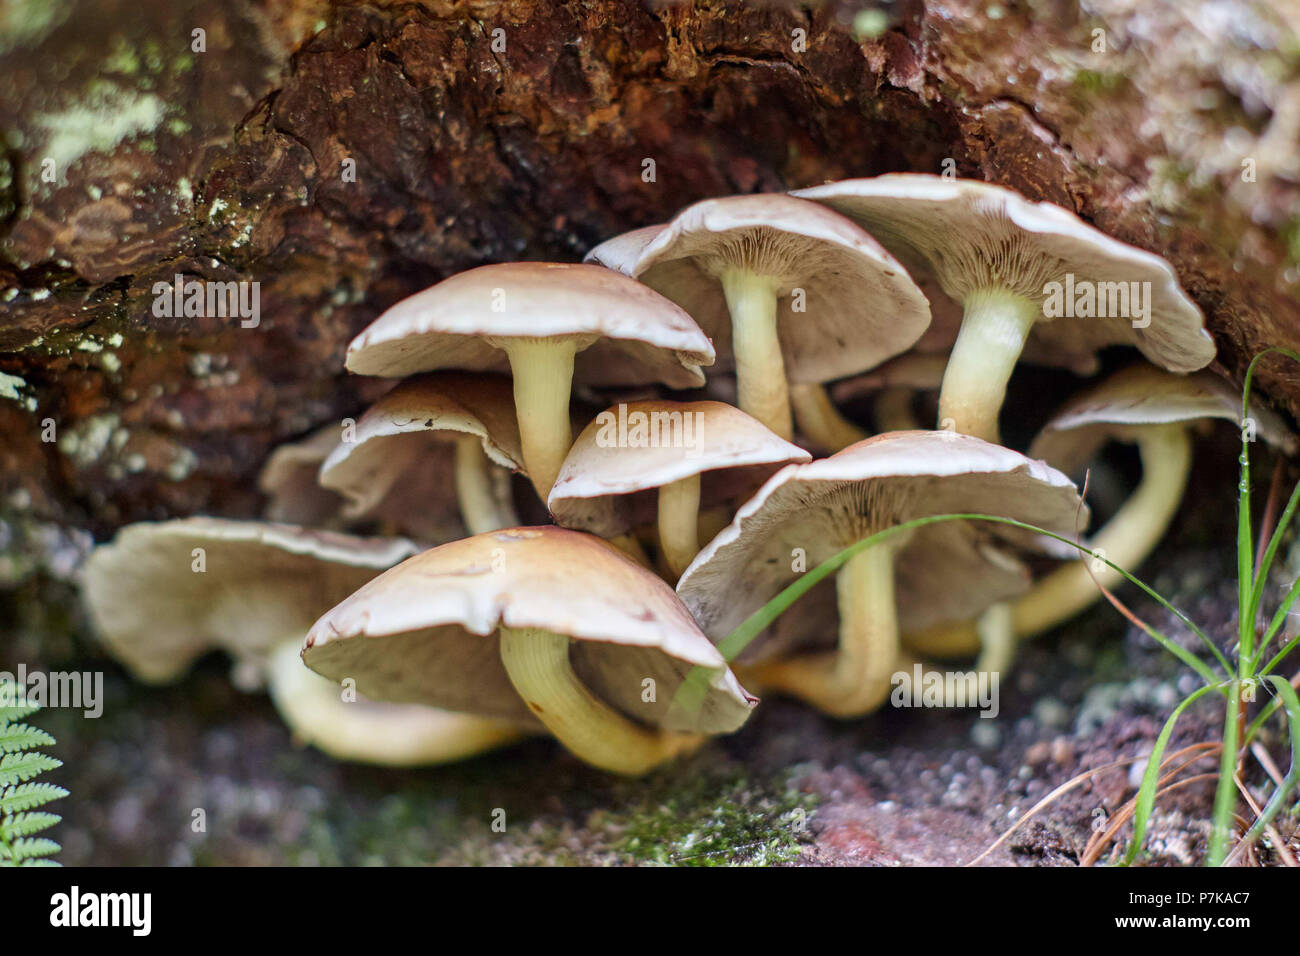 Tree fungi growing on old trunk Stock Photo